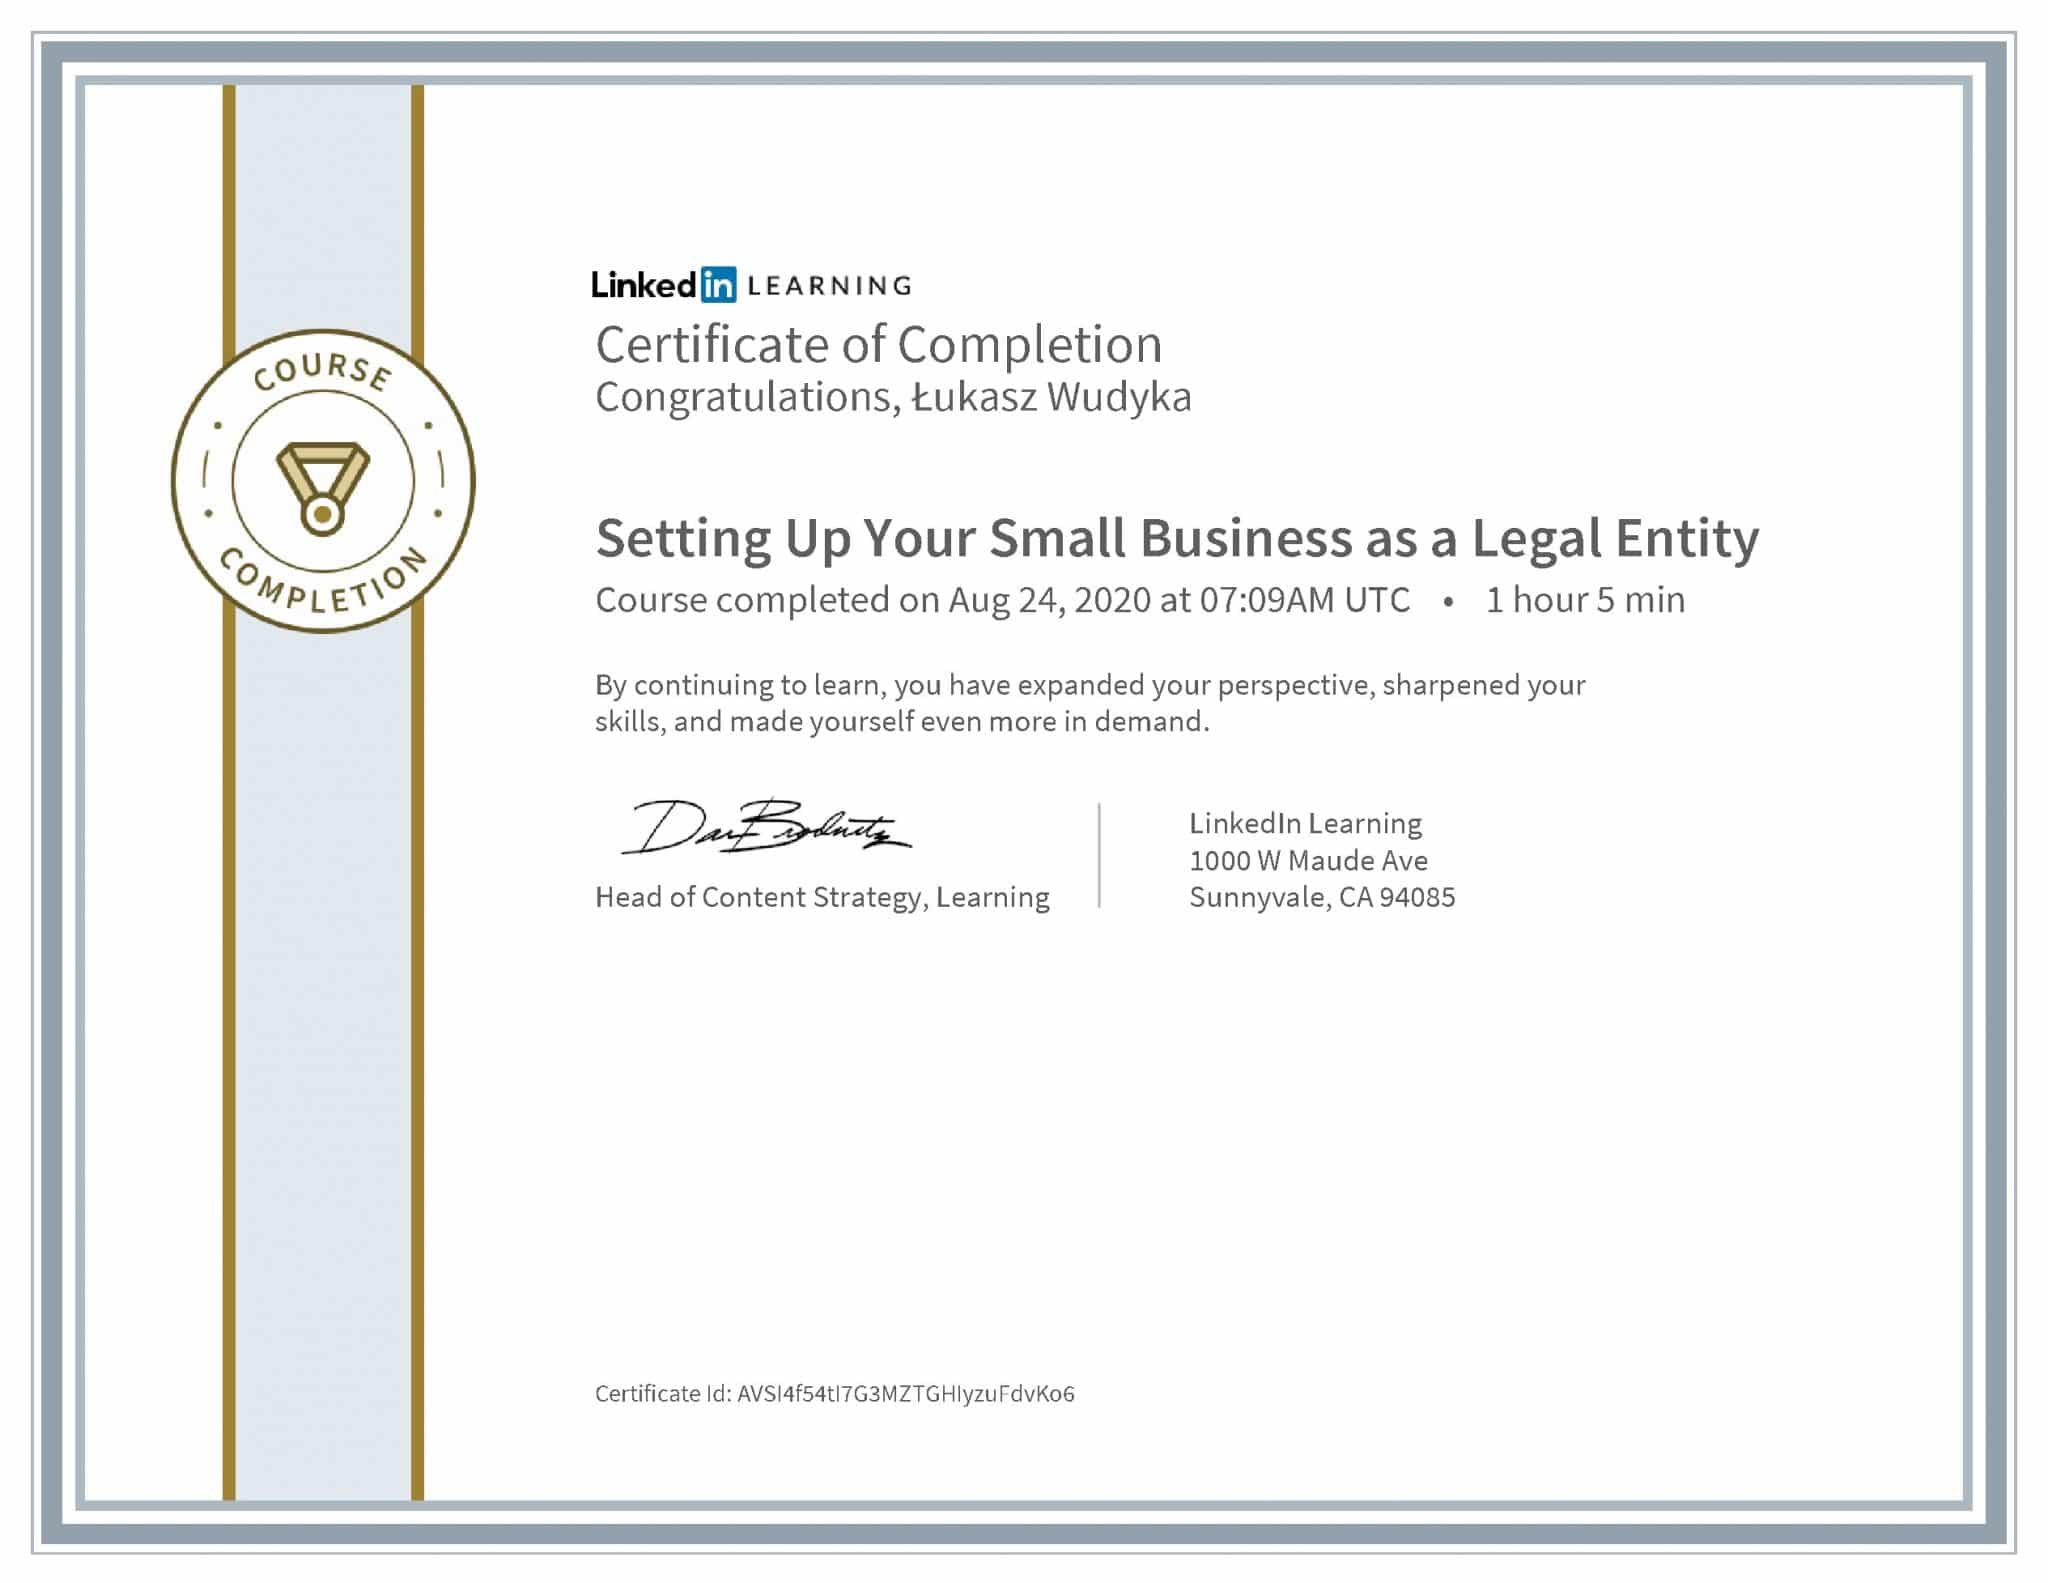 Łukasz Wudyka certyfikat LinkedIn Setting Up Your Small Business as a Legal Entity